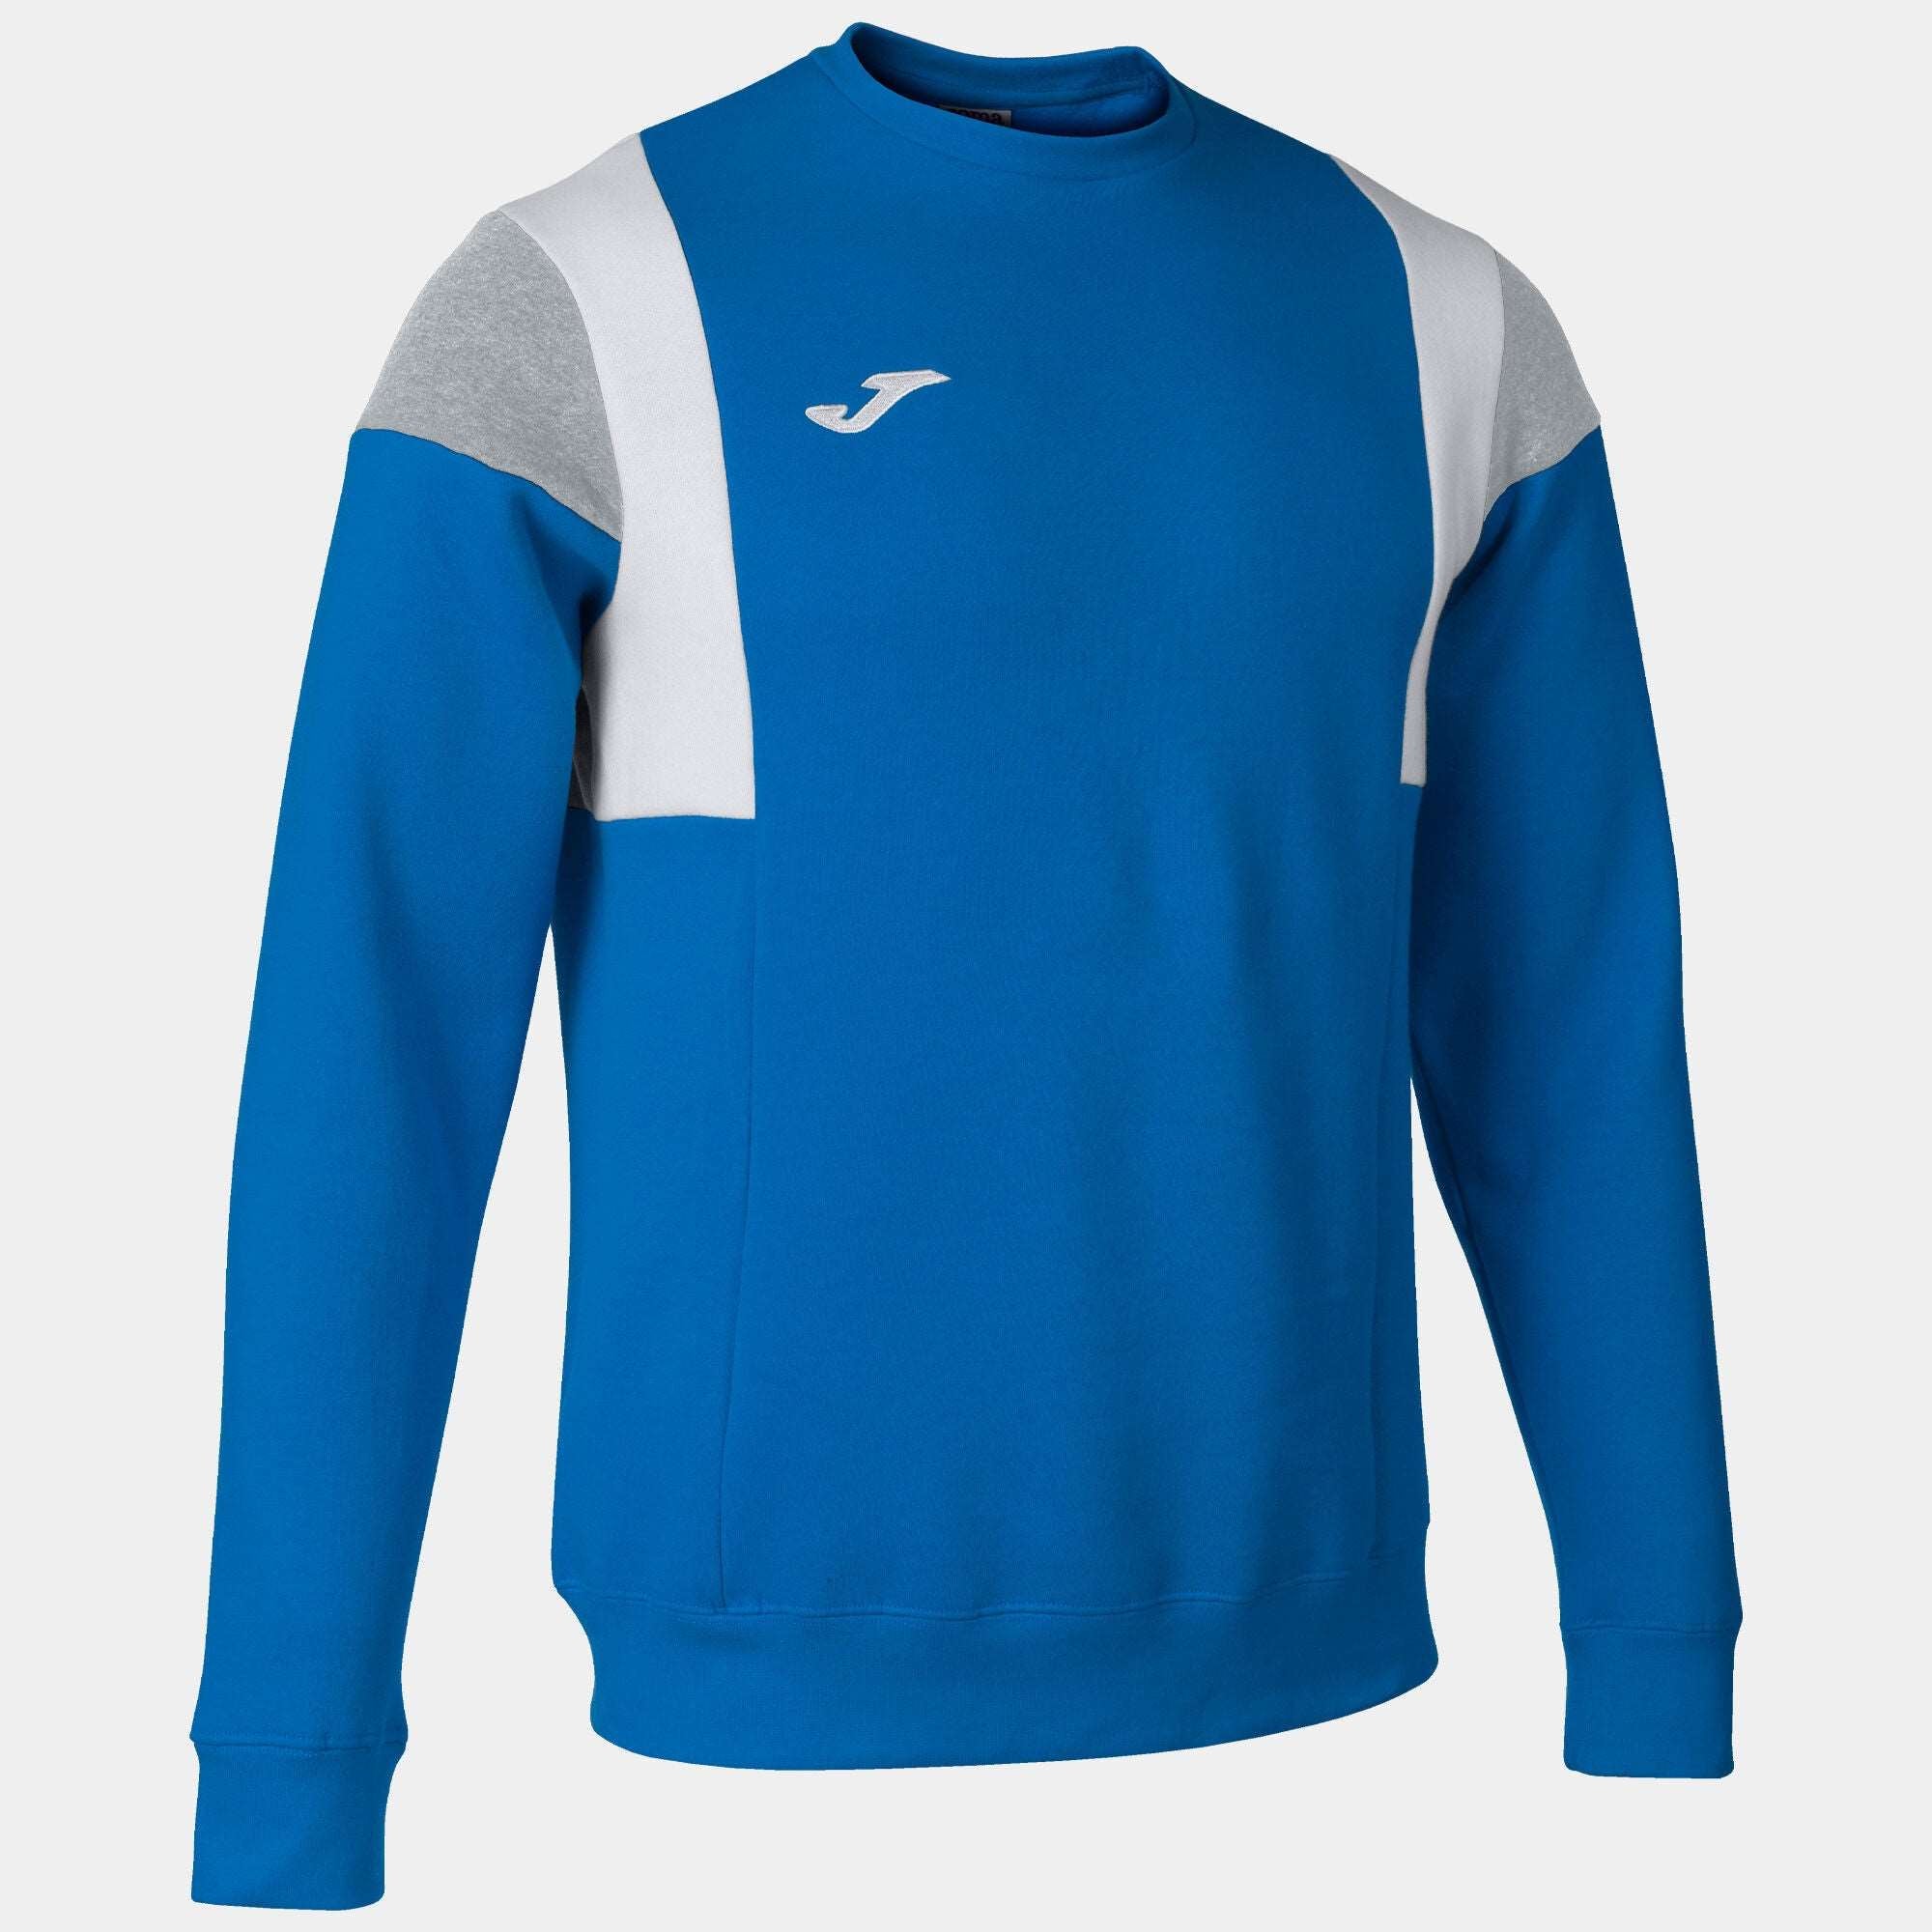 Joma Sweatshirt For Men-MSWS-2007-Royal Blue - FactoryX.pk